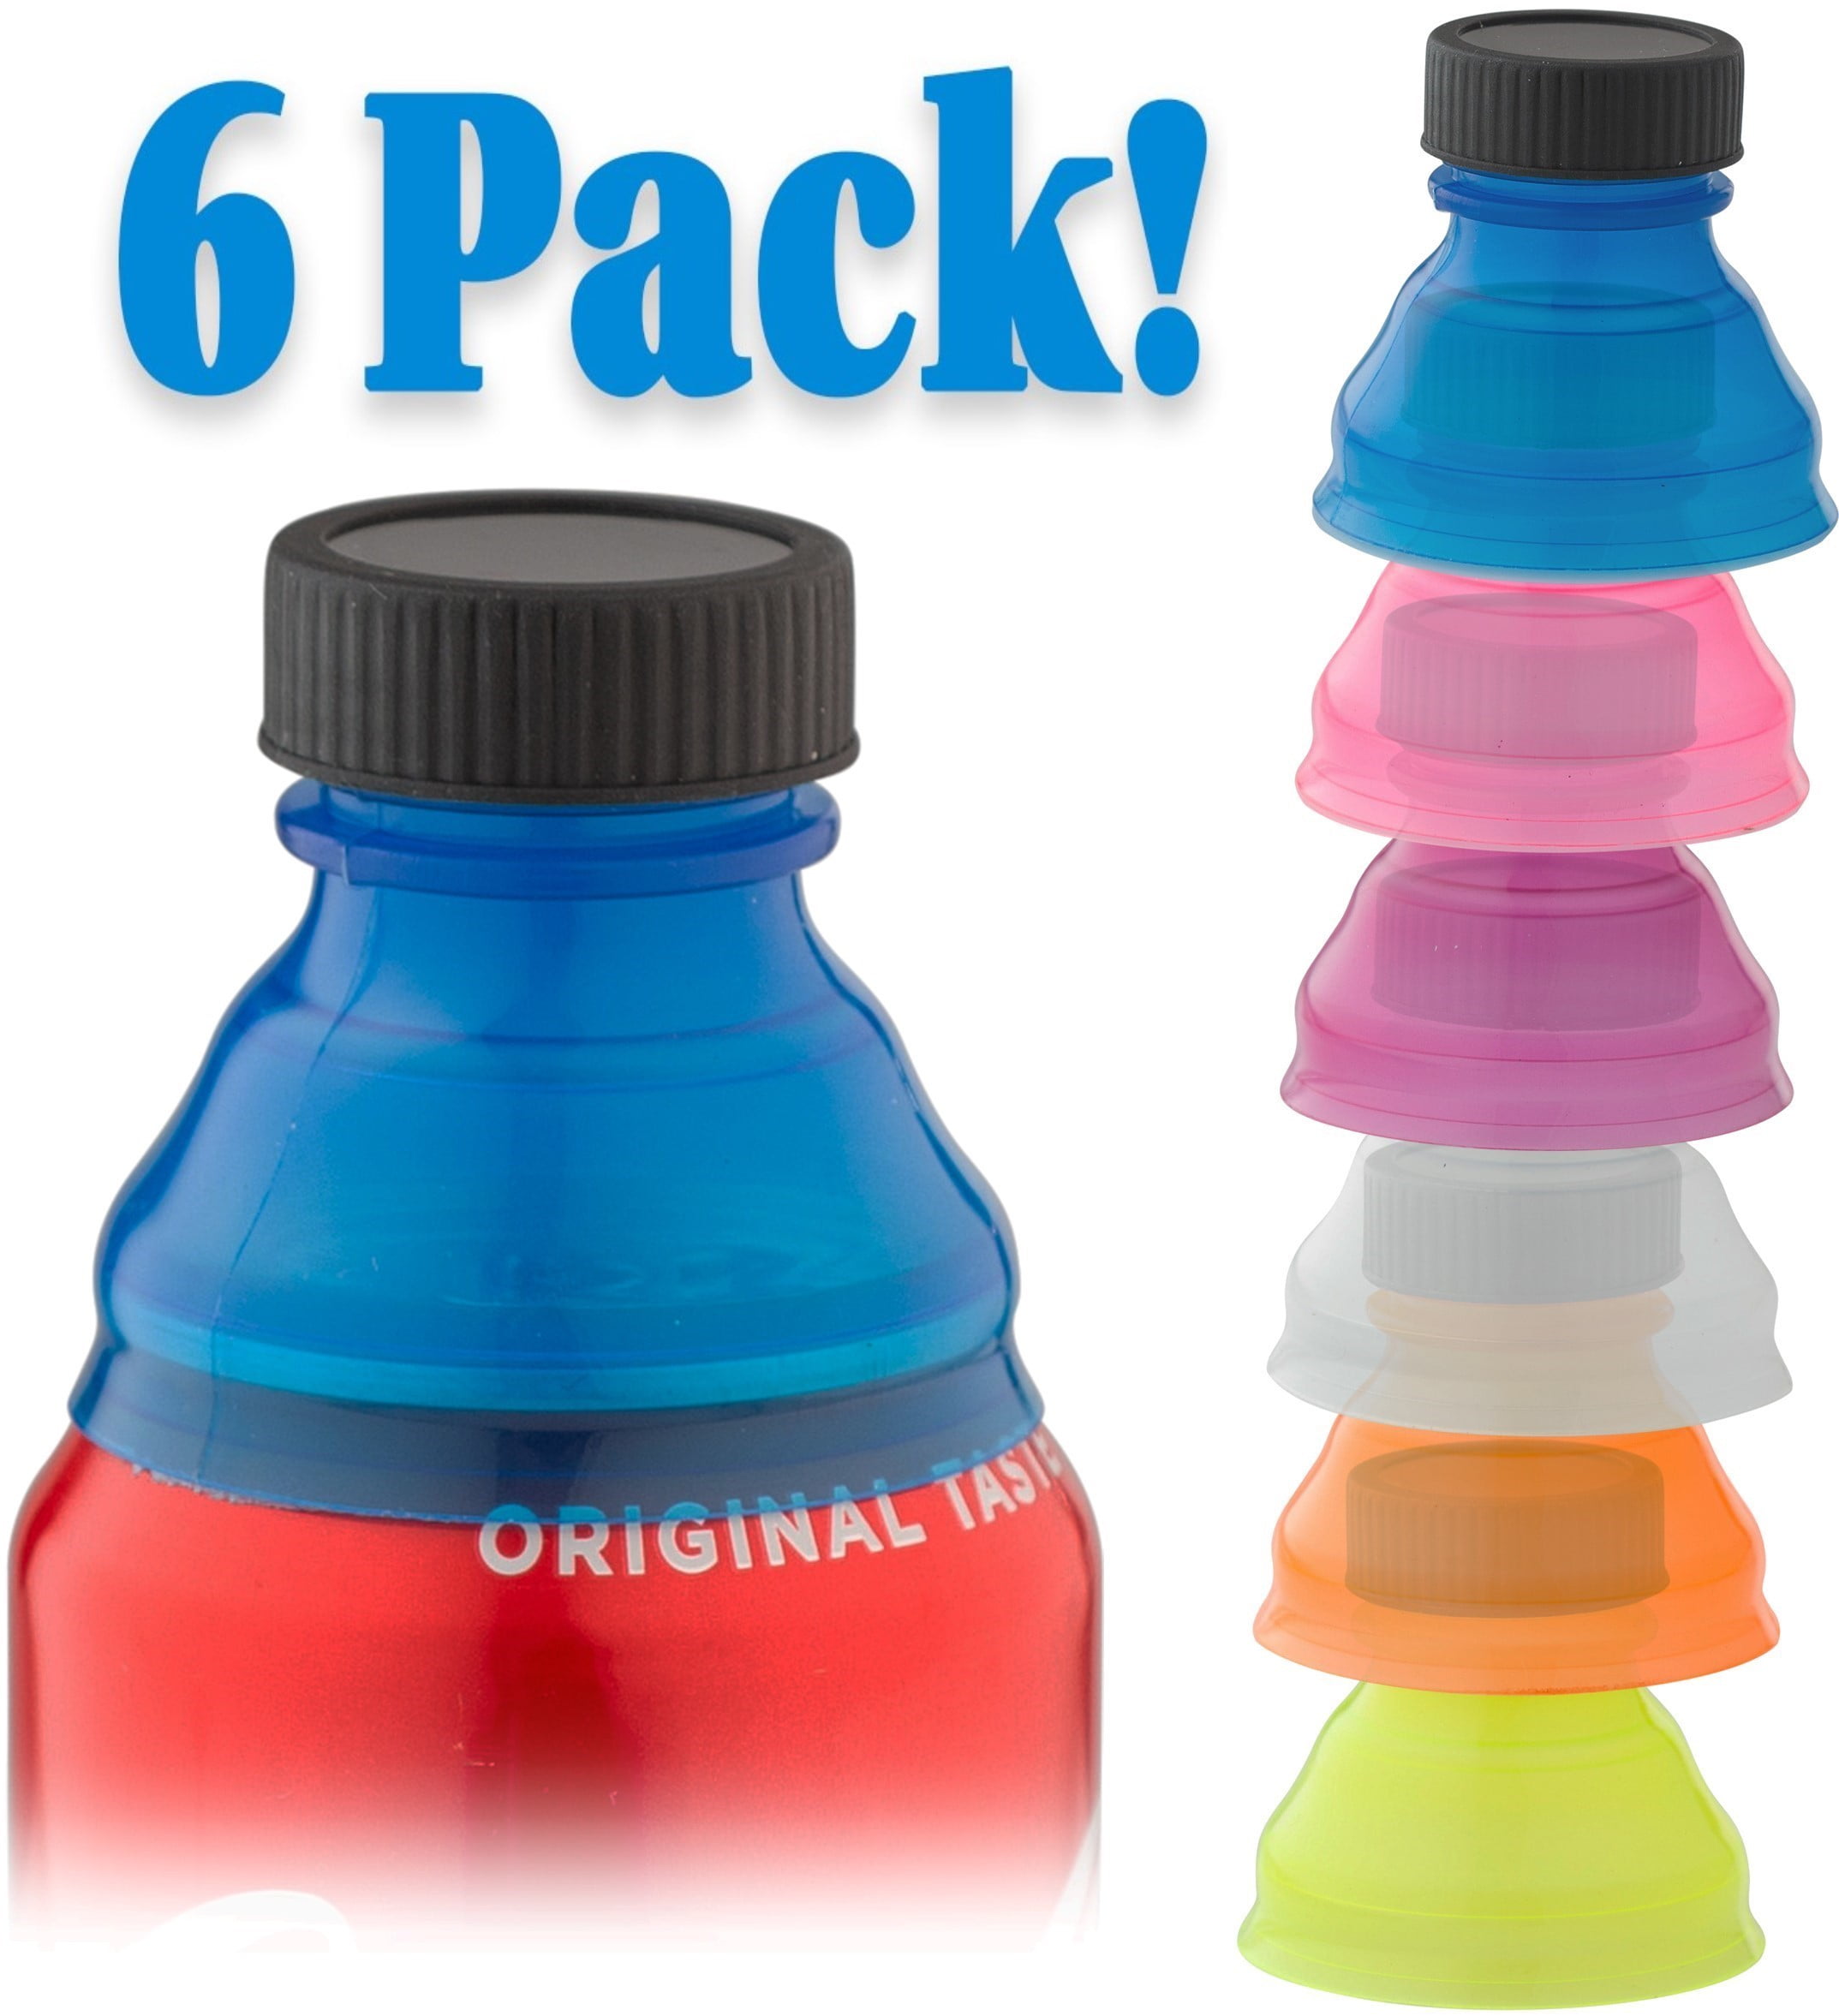 Soda or Beverage Can Lid, Cover or Protector, Fits Standard Soda/Beverage  cans (2 Pack, Orange & Blue)